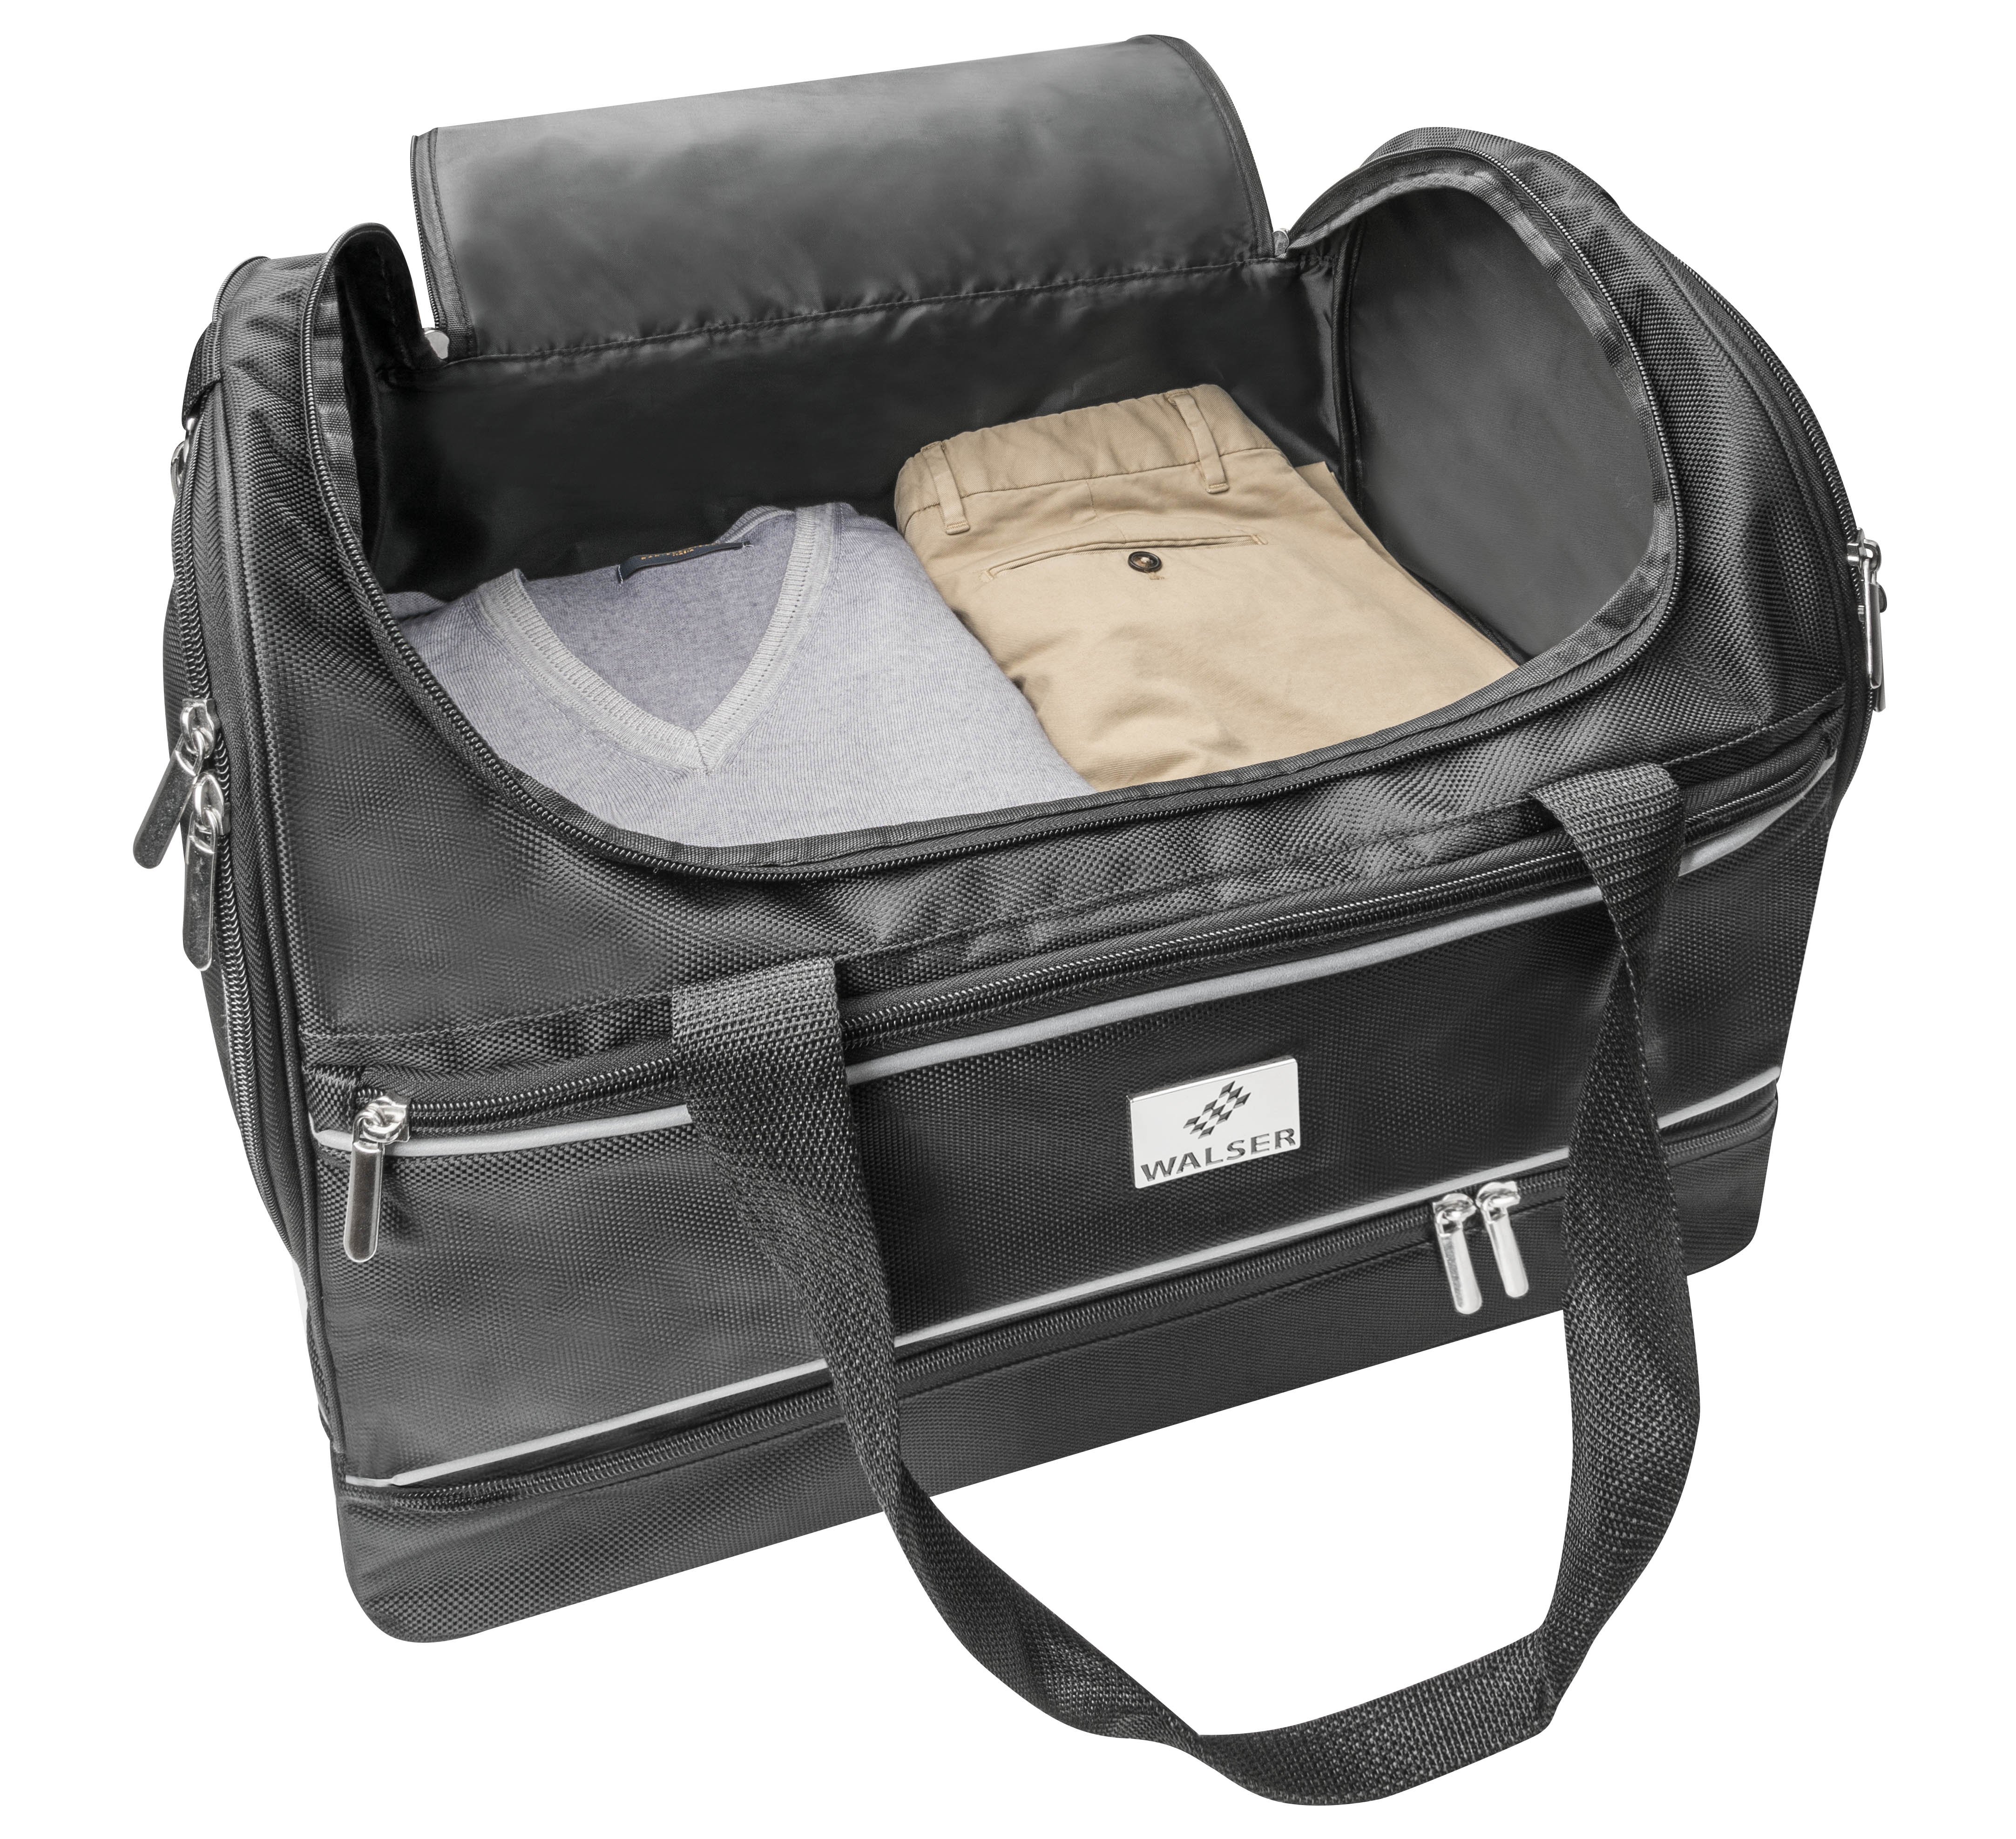 Carbags sports bag 55x30x45cm black